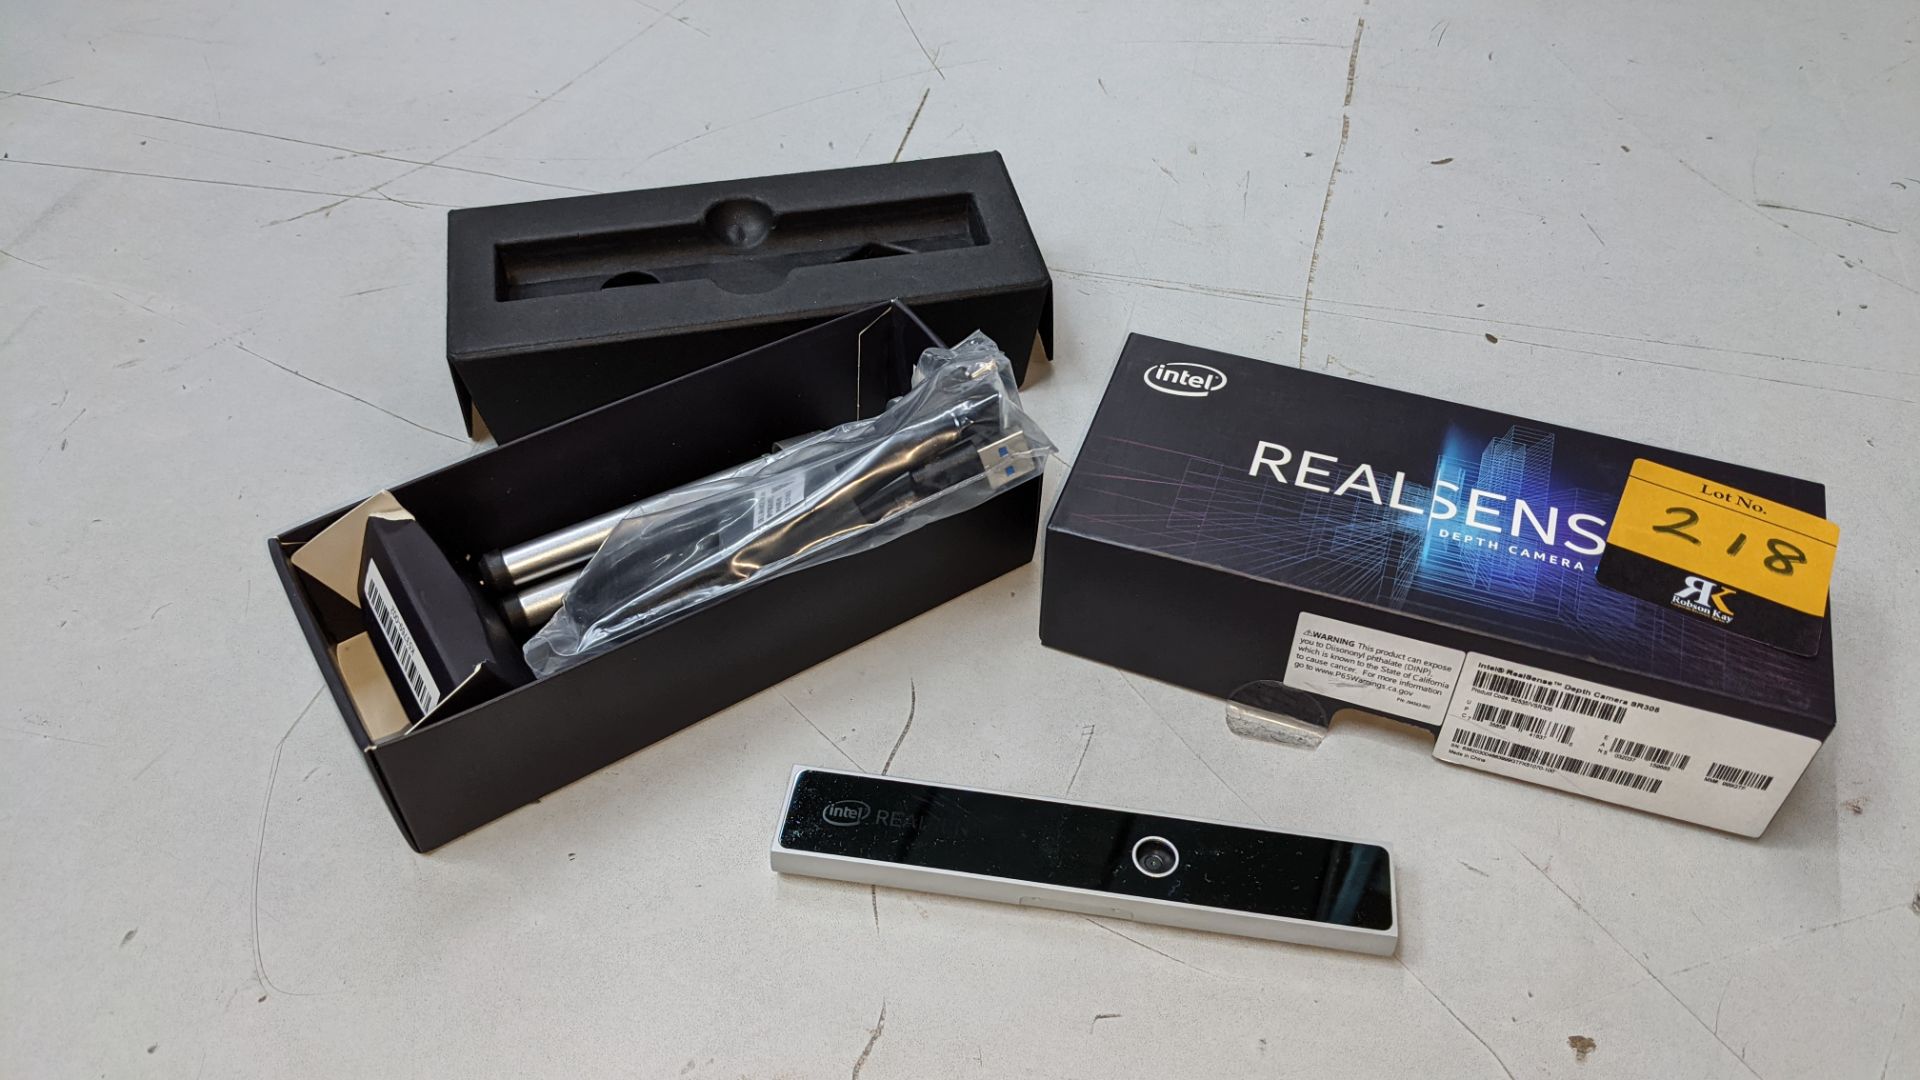 Intel Realsense depth camera model SR305 including tripod & box. NB. Check photographs accompanying